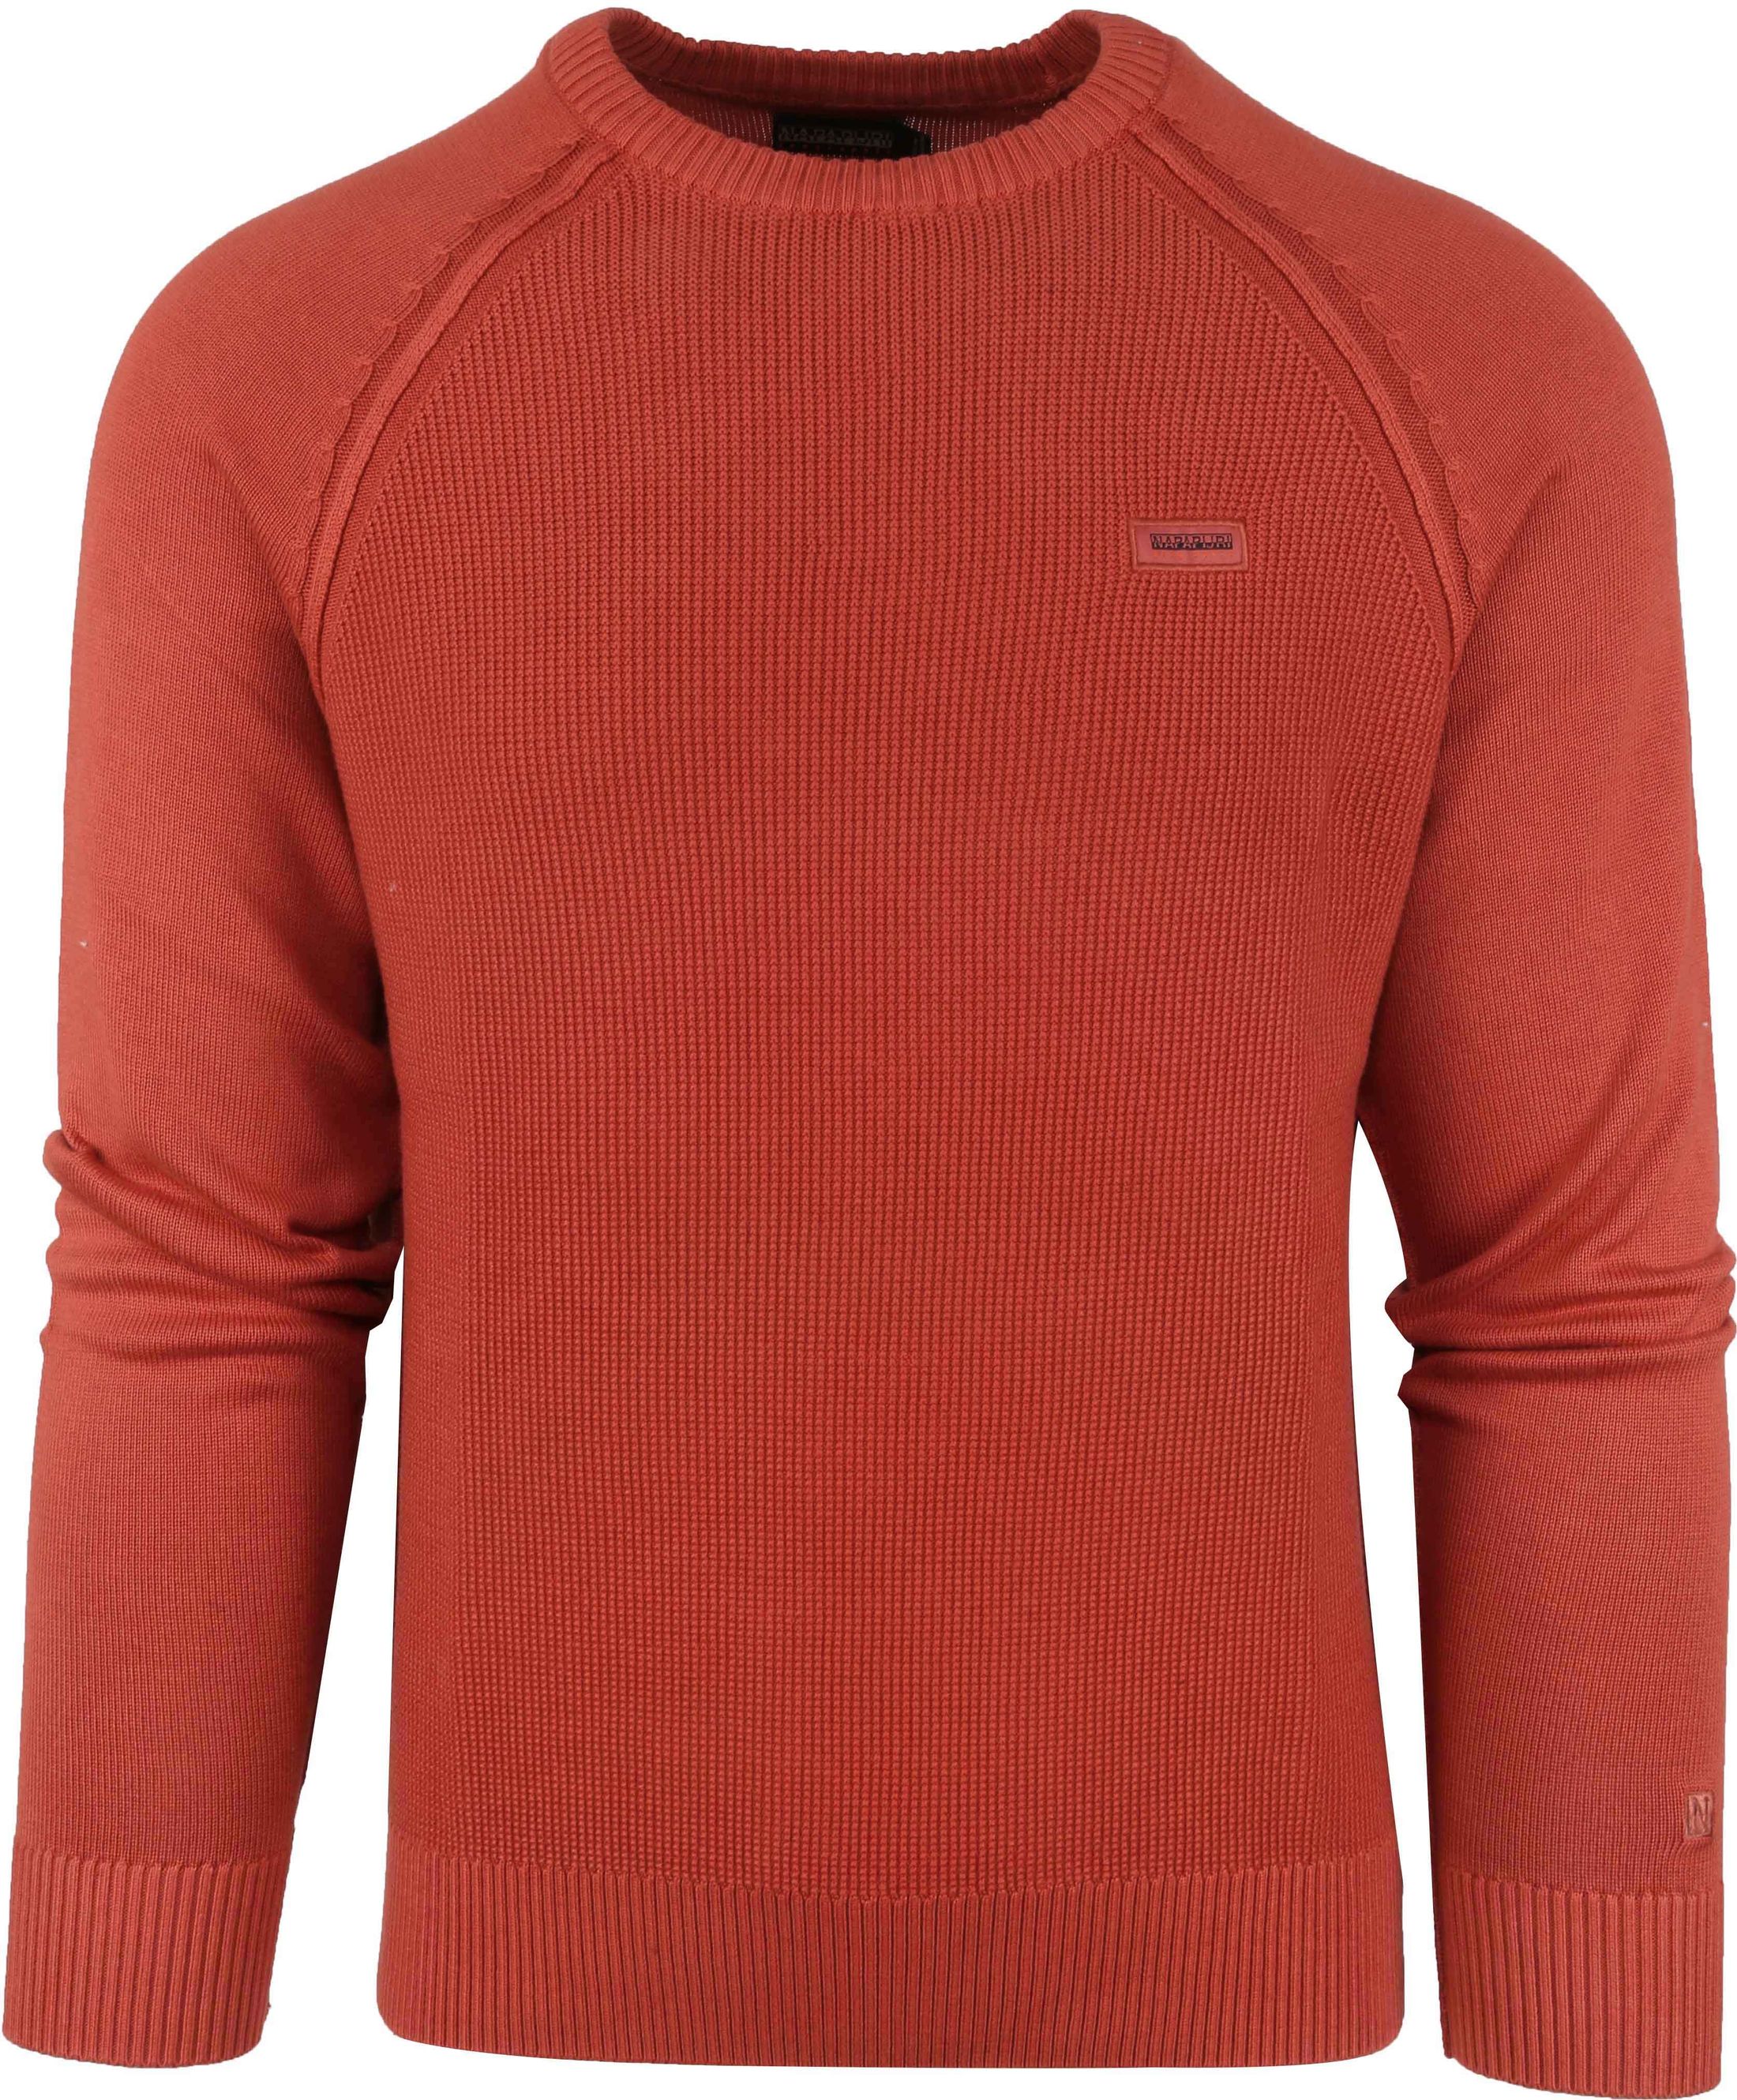 Napapijri Sweater Red size M